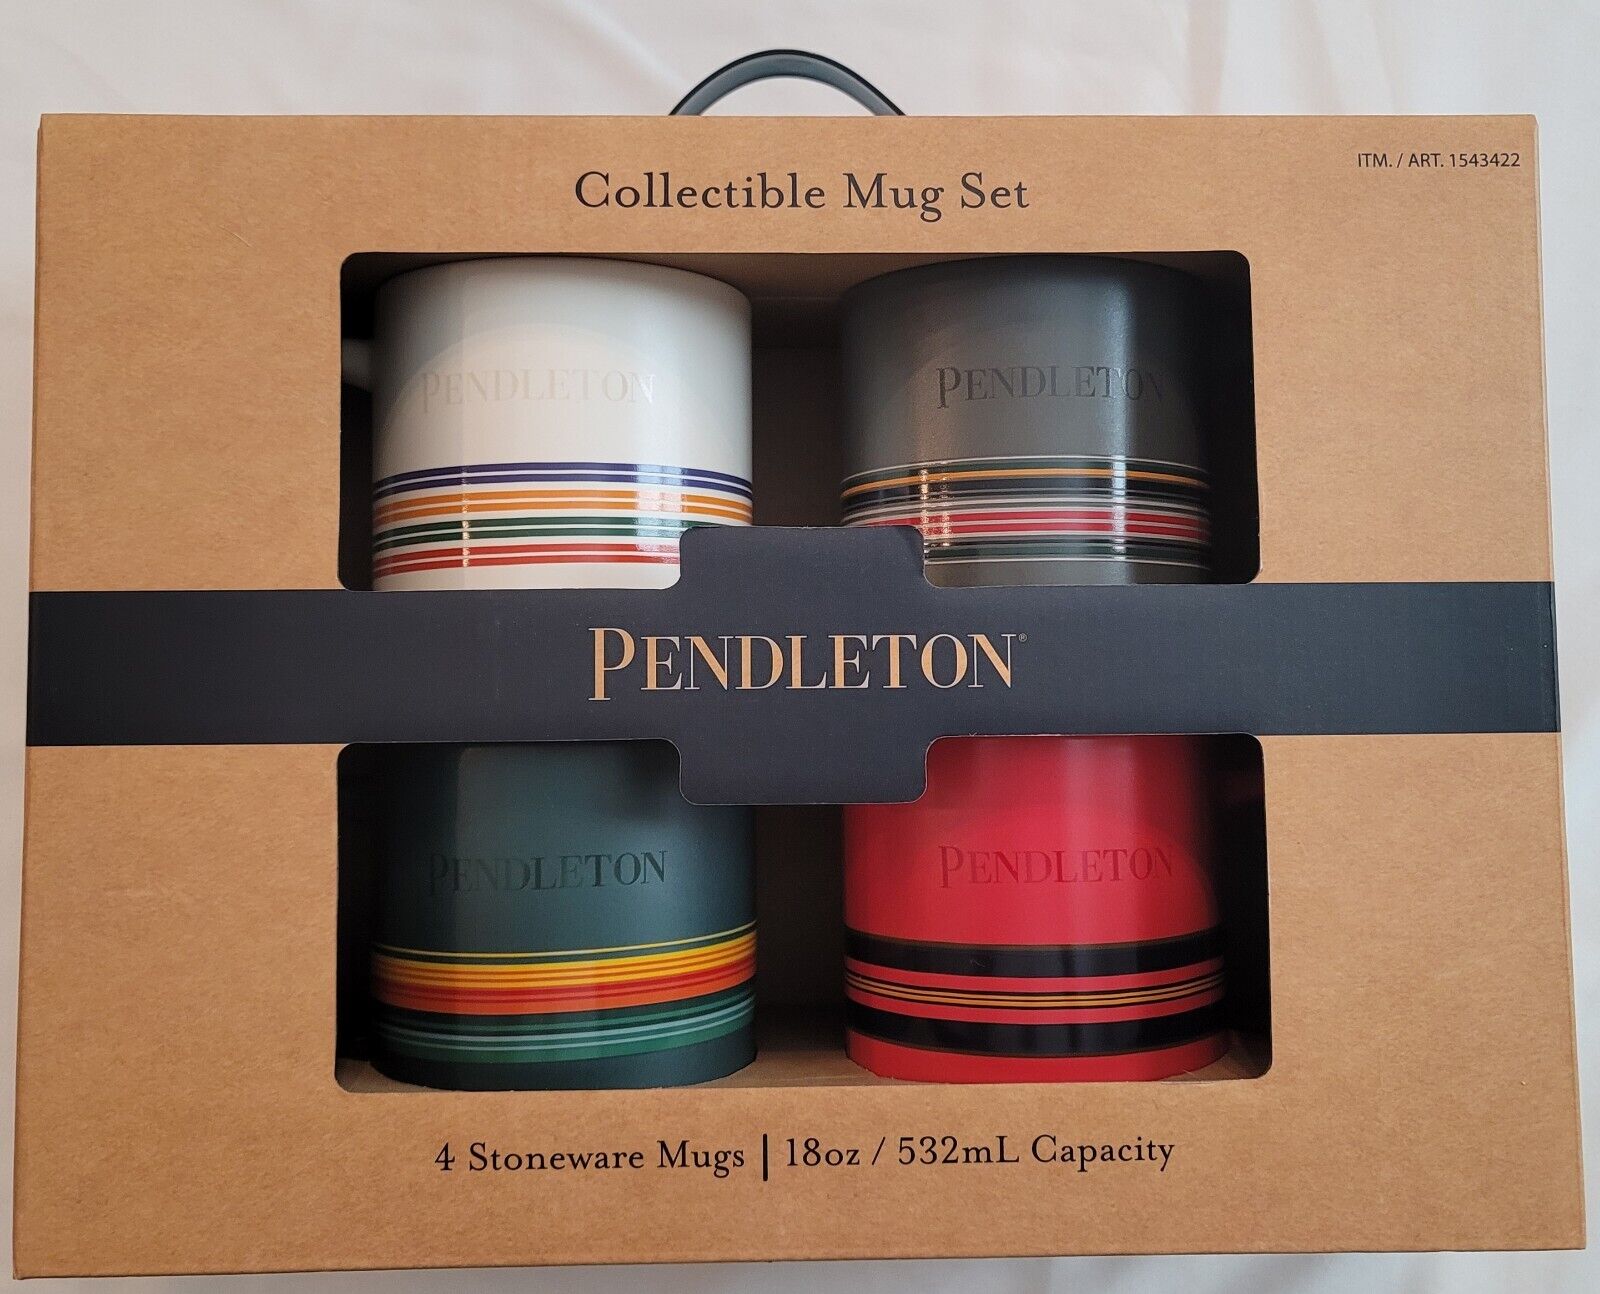 Pendleton National Parks Collectible Stoneware Mugs, 4-Pack 18 oz capacity - NIB